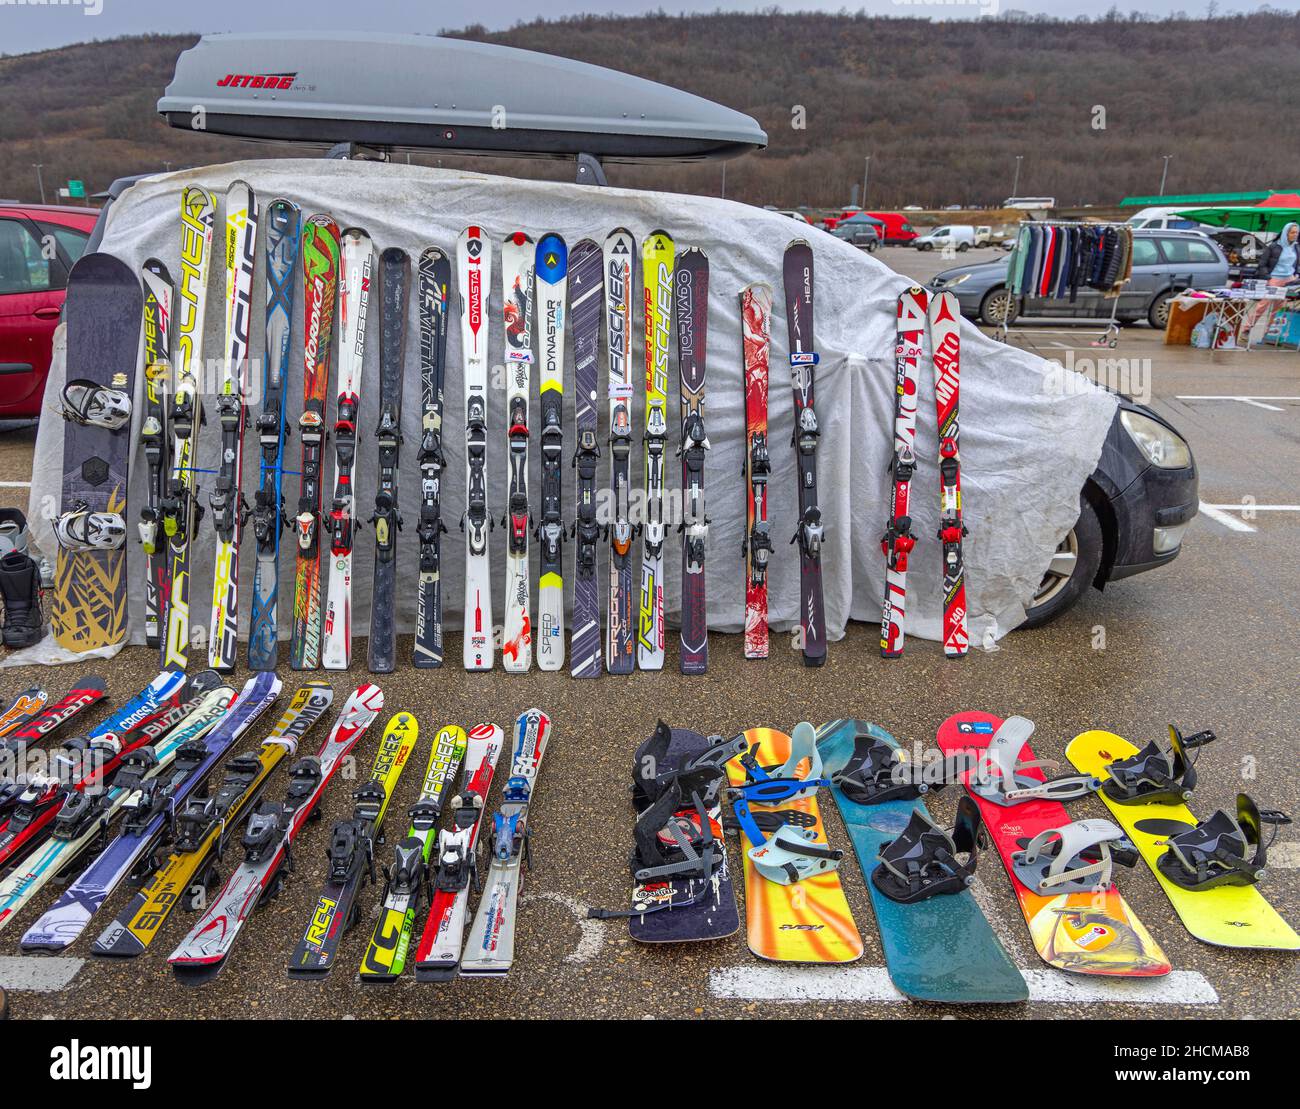 Belgrade, Serbia - December 25, 2021: Second Hand Snow Board and Ski Equipment for Sale at Flea Market. Stock Photo